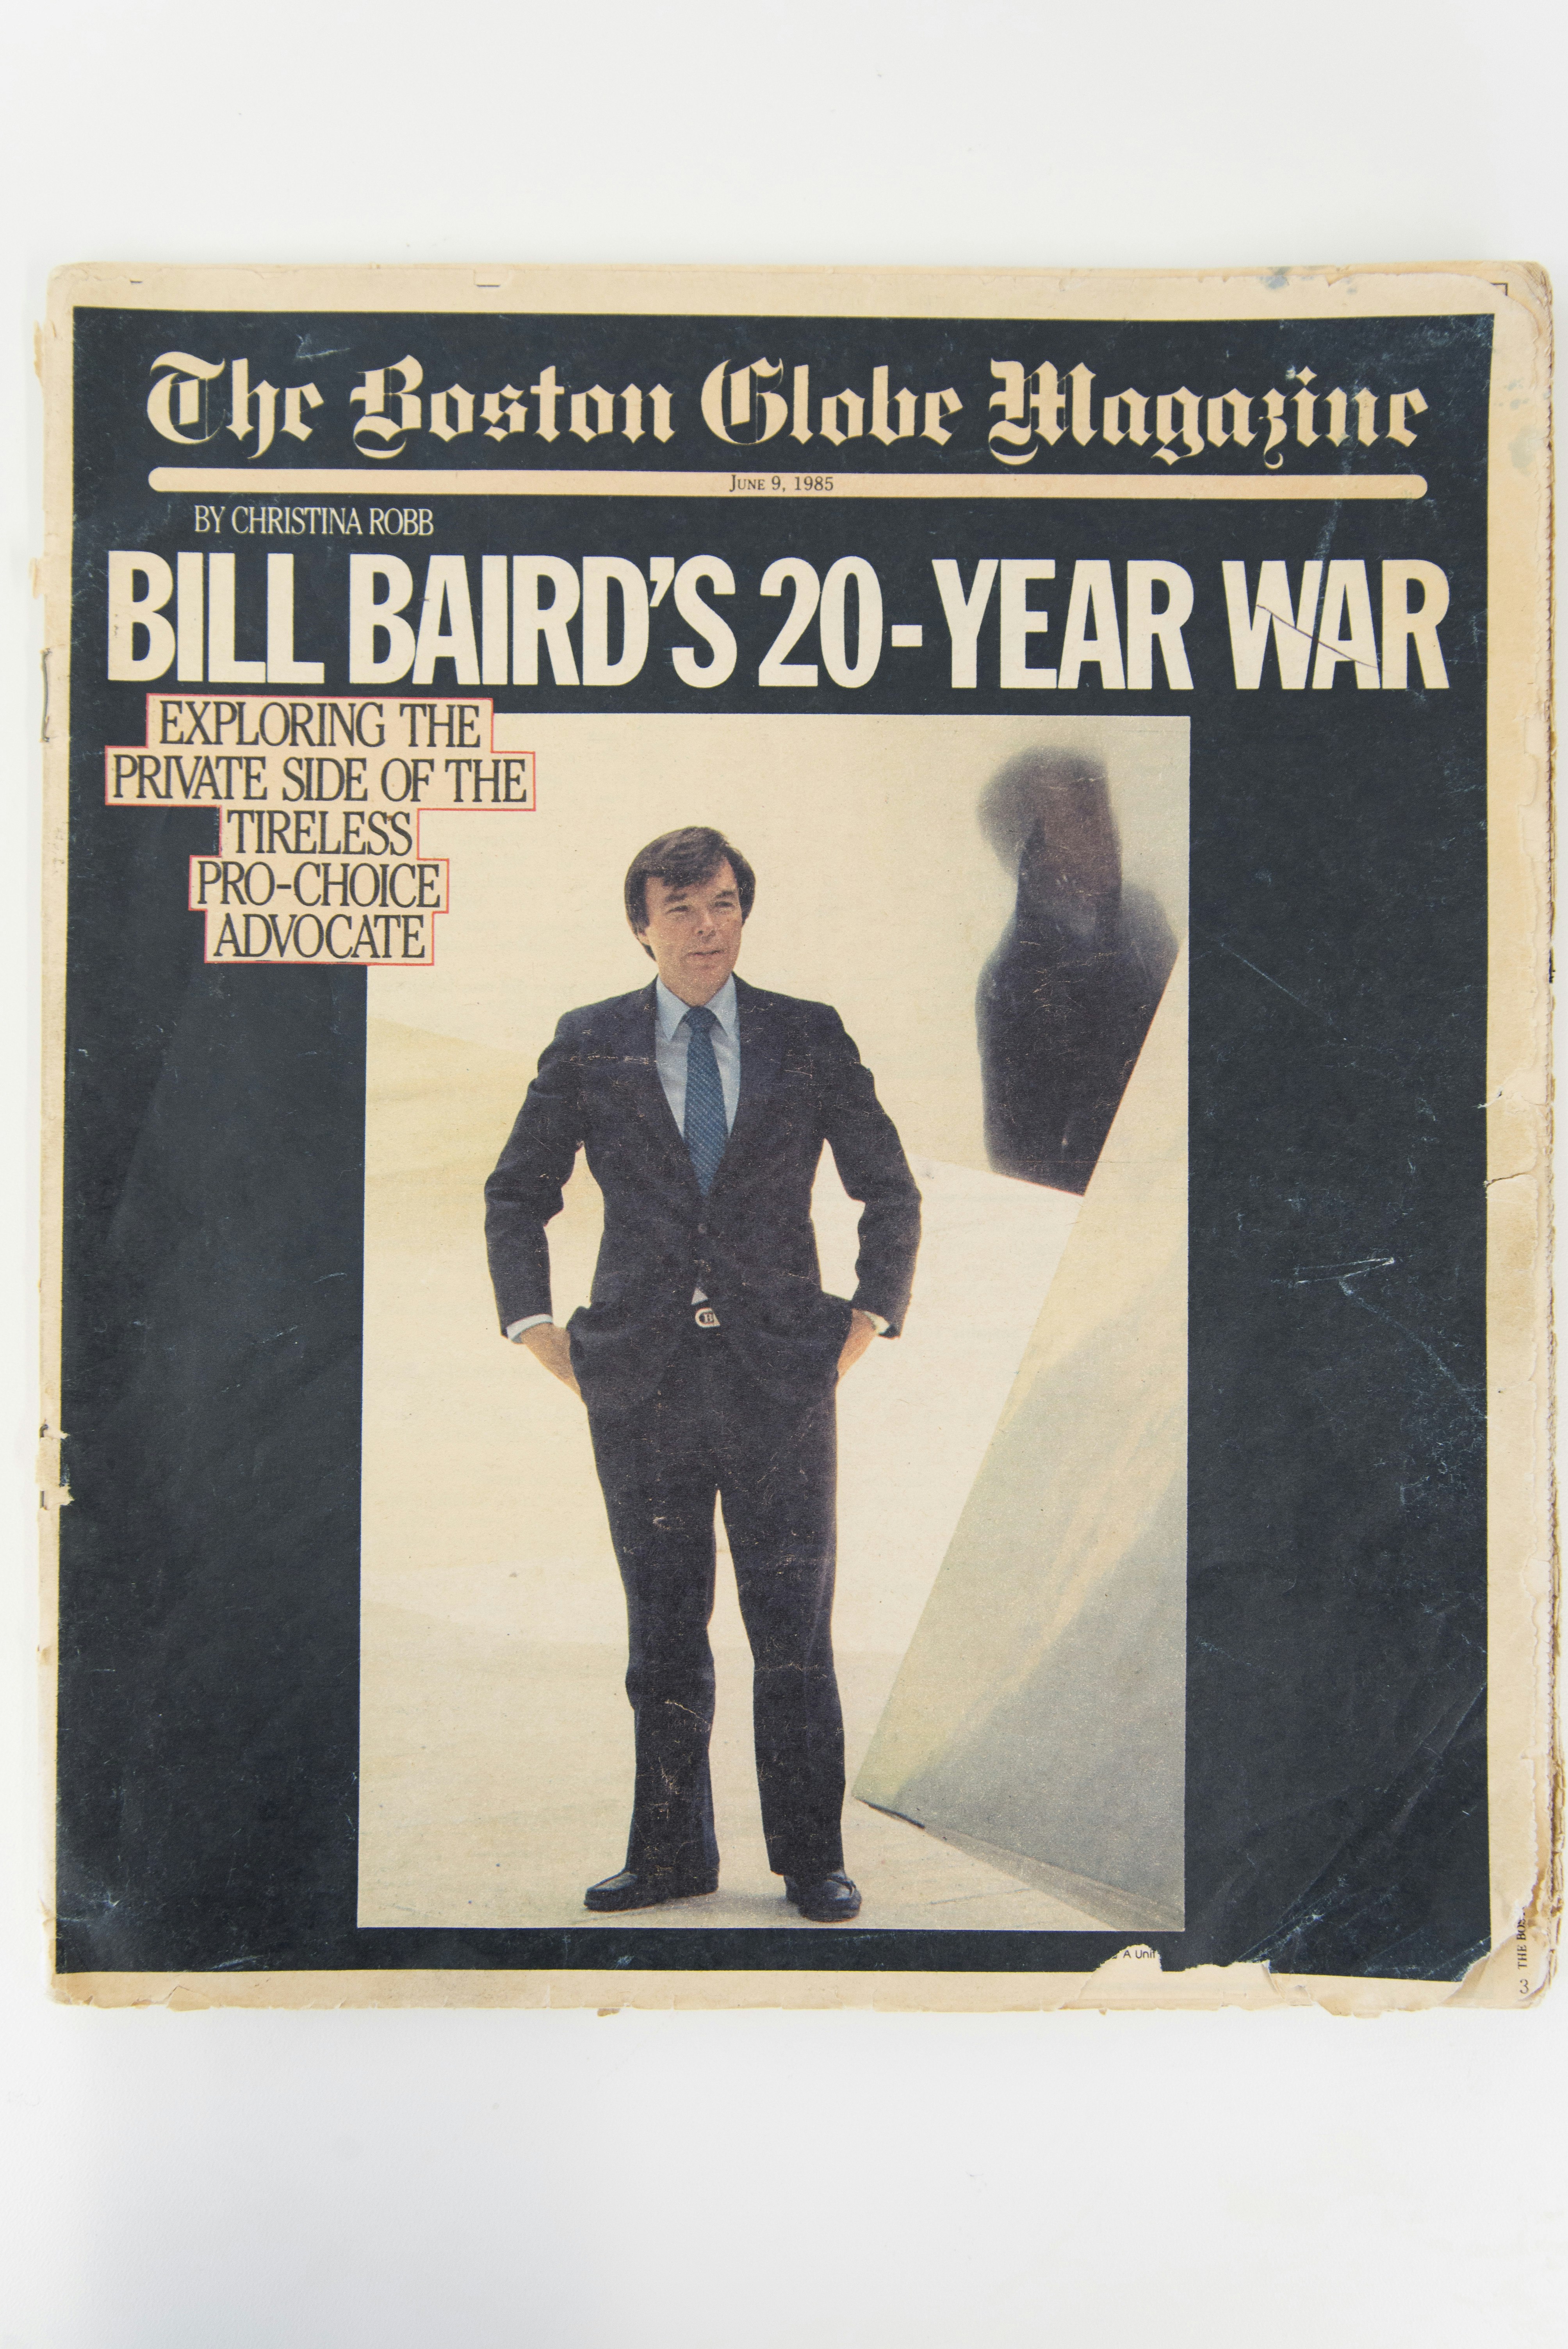 Bill Baird on the cover of the Boston Globe Magazine